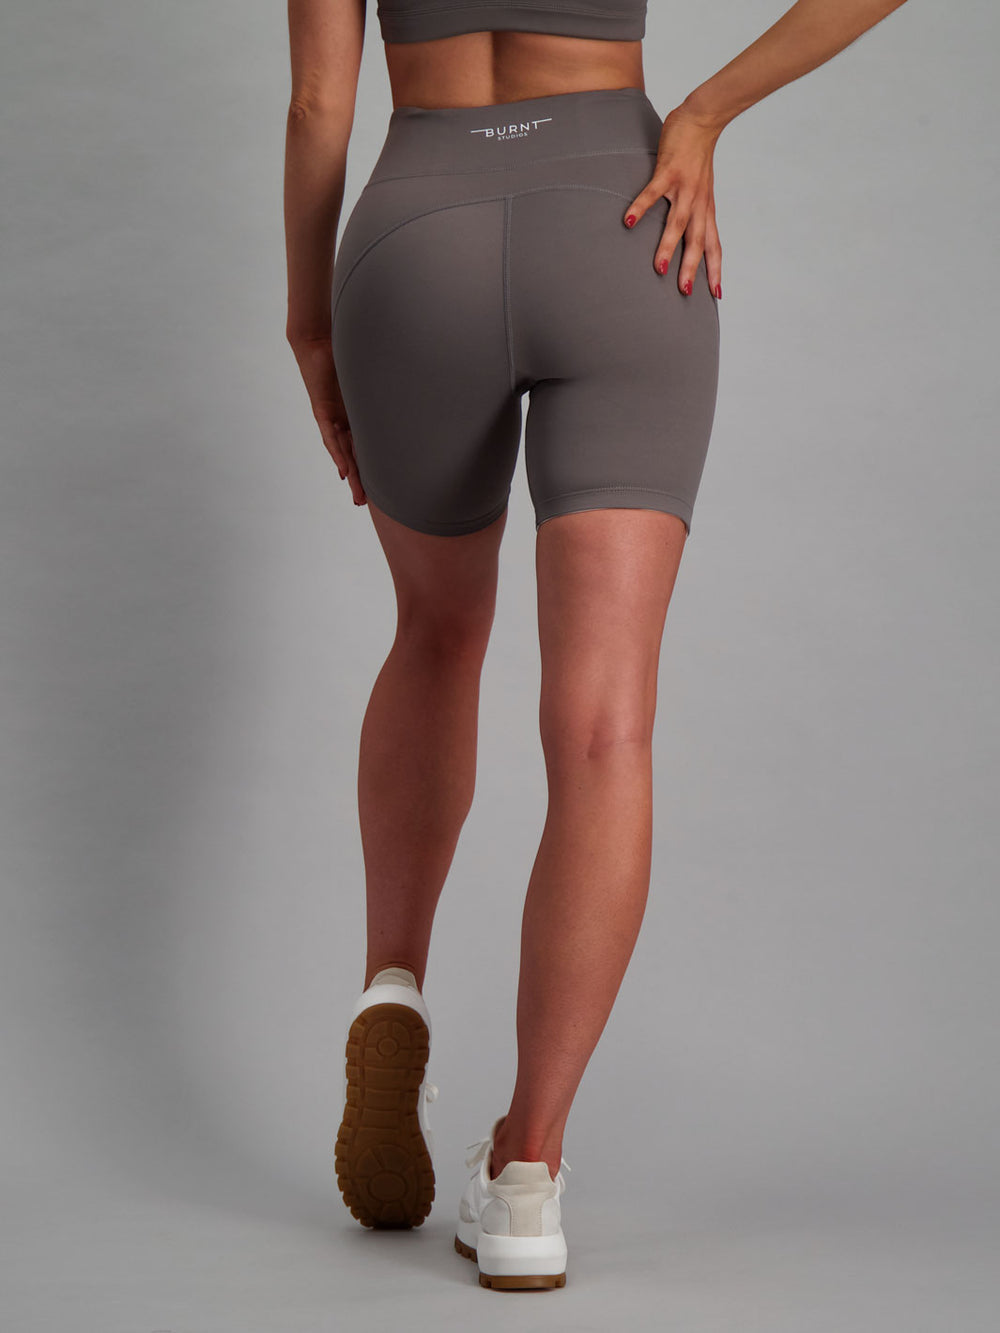 Cortado colour activewear shorts with no-ride feature. 